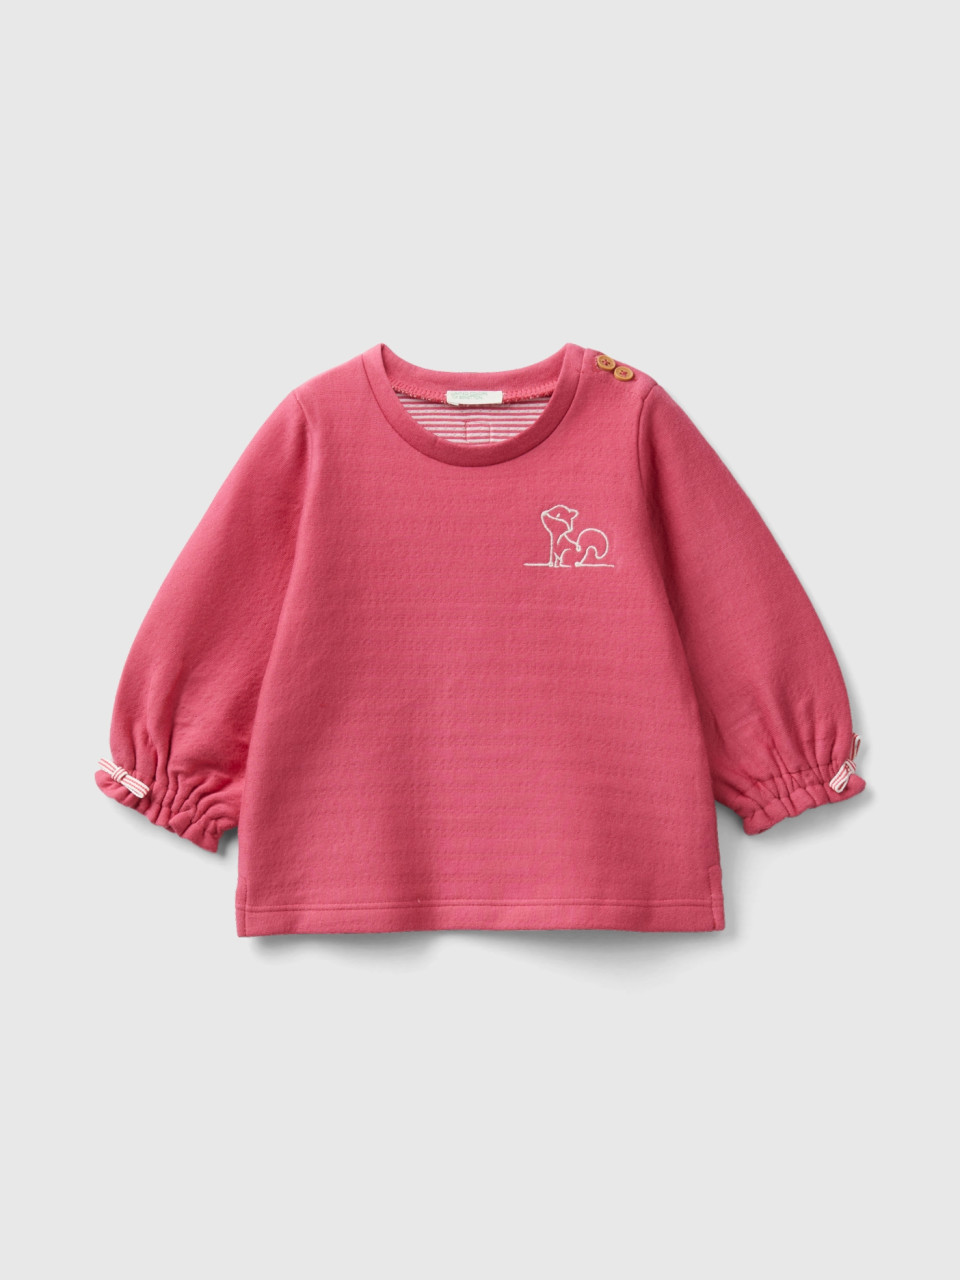 Benetton, Striped Sweatshirt With Embroidery, Salmon, Kids